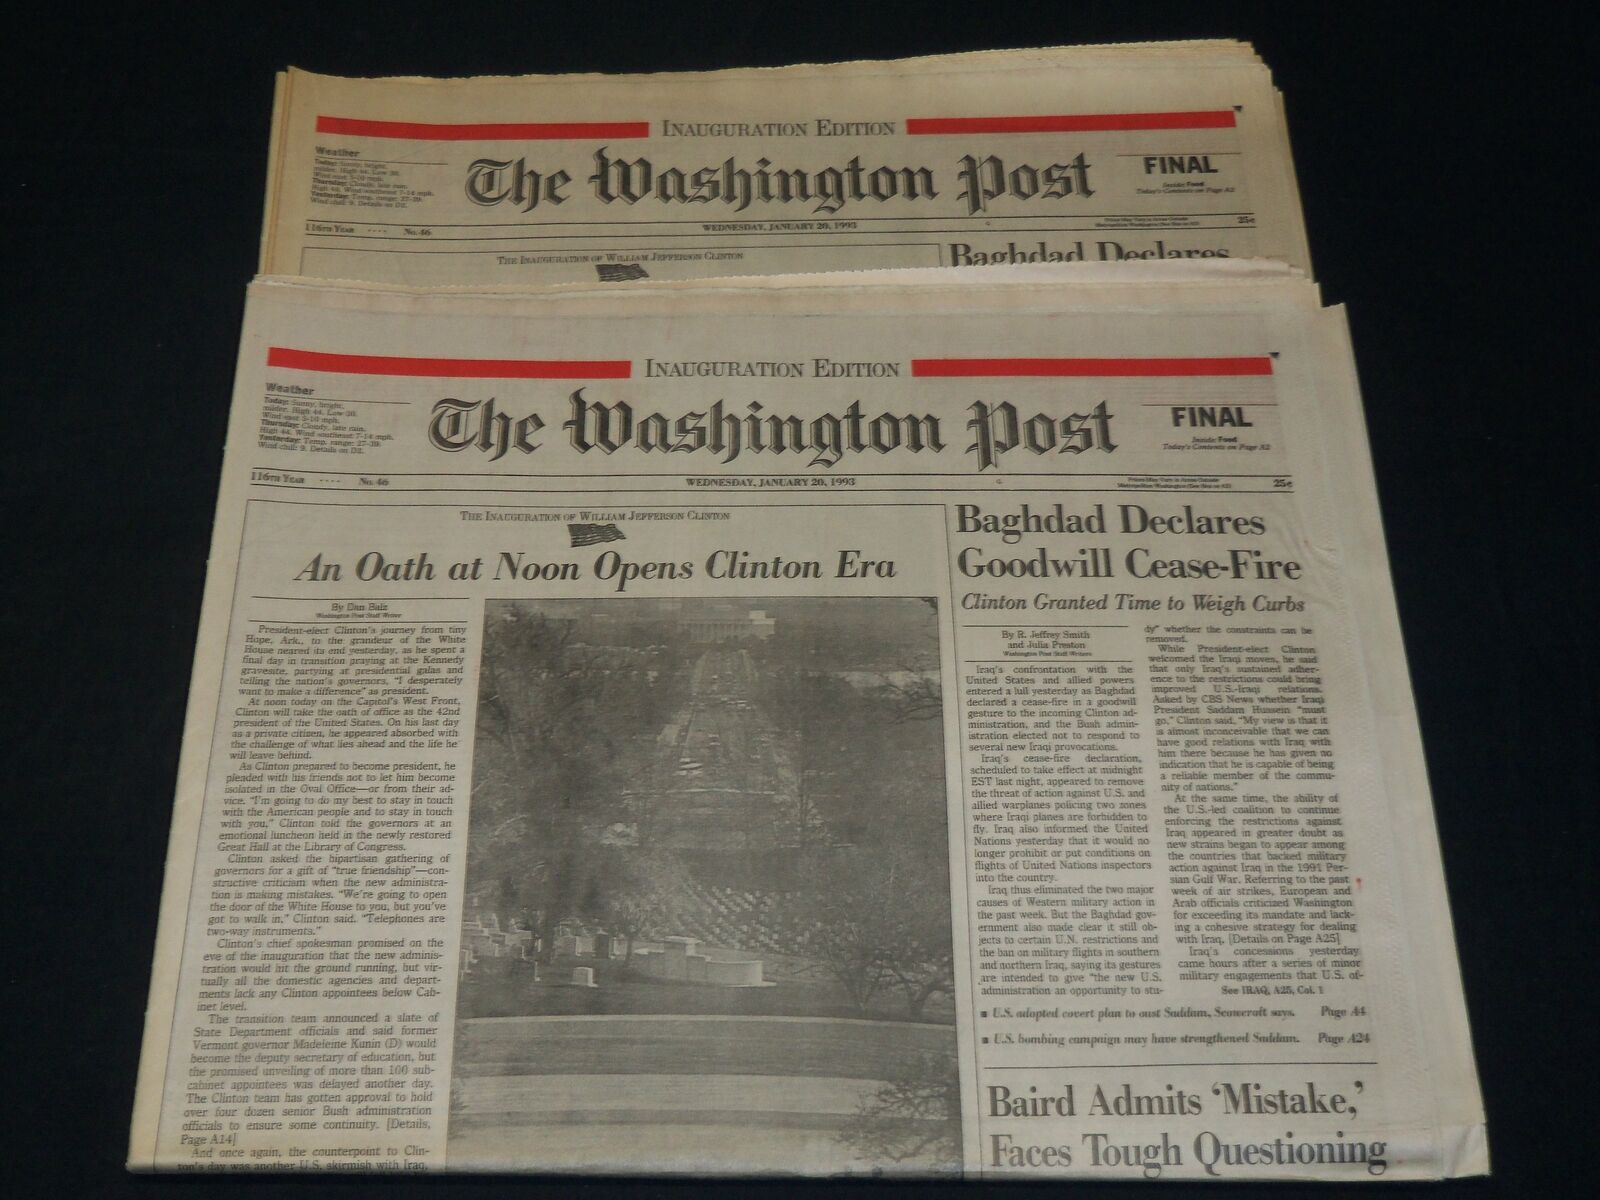 1993 JANUARY 20 WASHINGTON POST NEWSPAPER LOT OF 2 - INAUGURATION - NP 4938